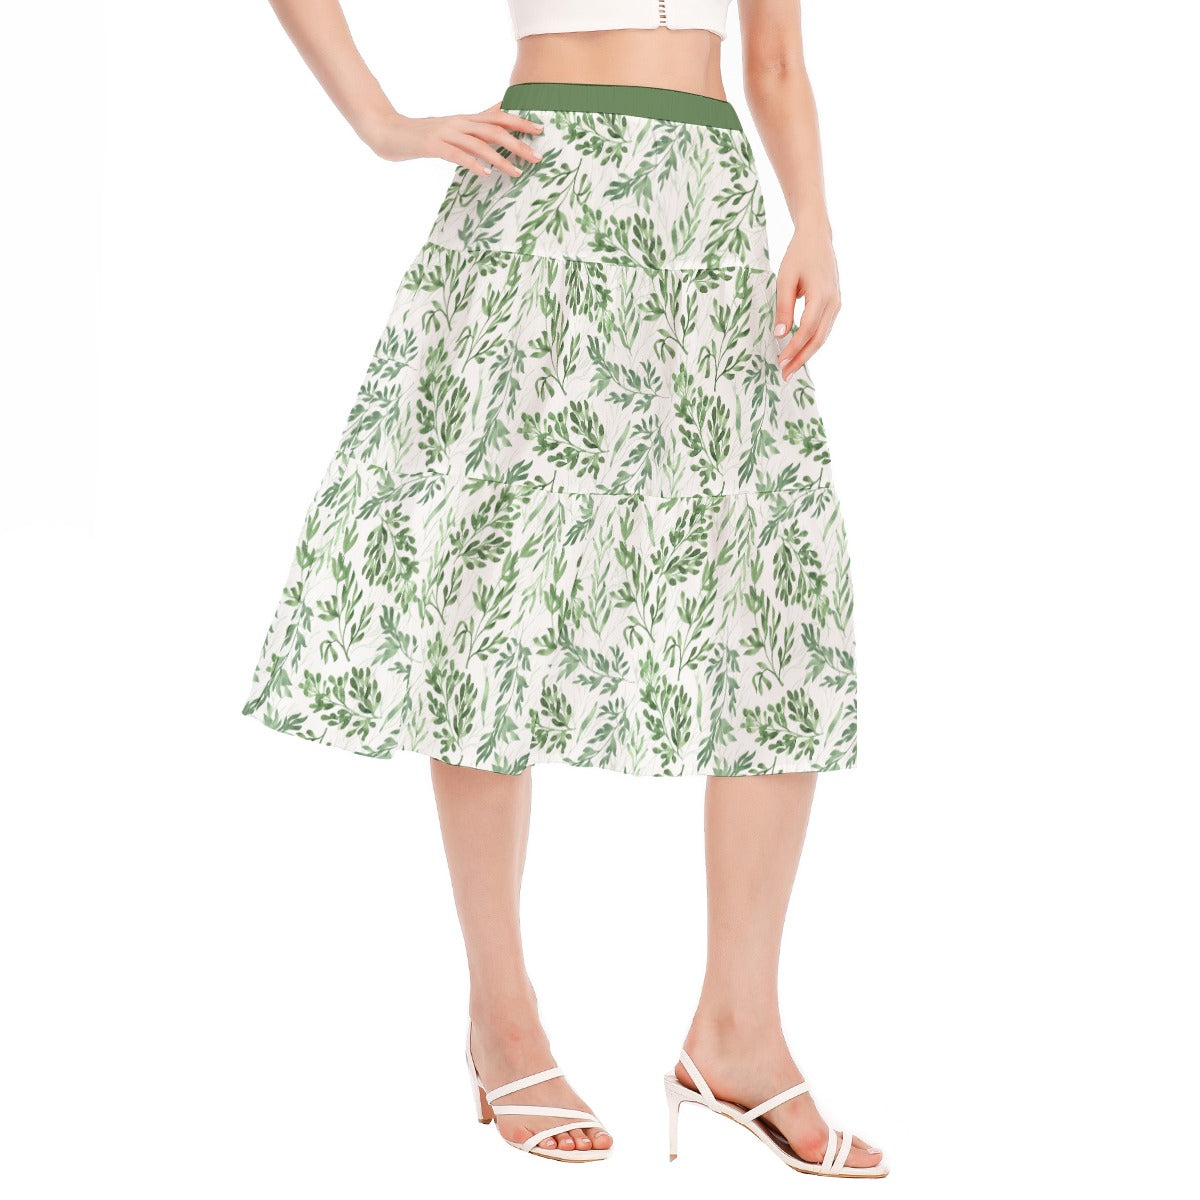 Bohemian Wild Floral Printed Women's Pleated Chiffon Skirt